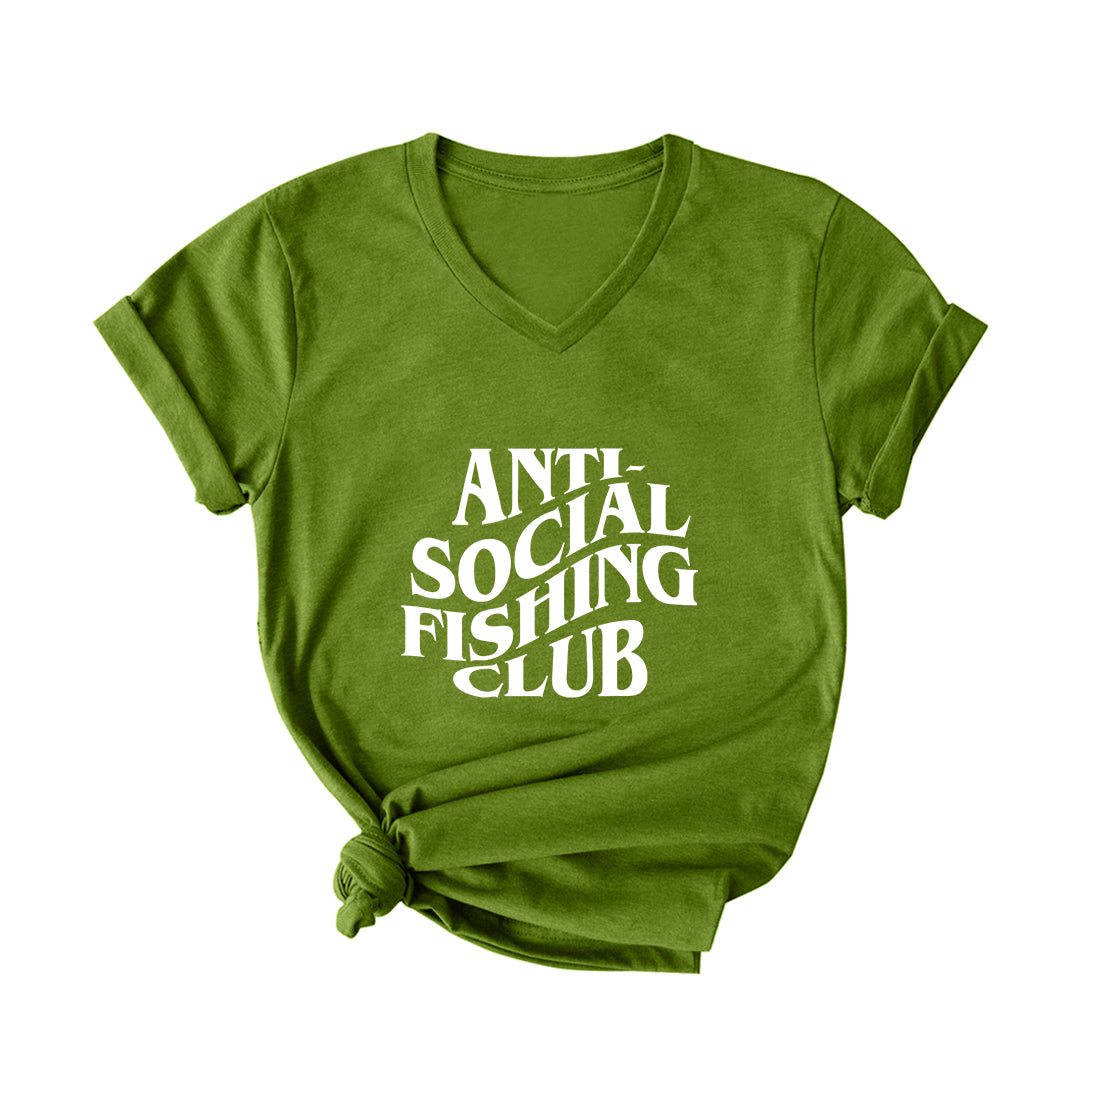 ANTI-SOCIAL FISHING CLUB V Neck T-Shirt for Women